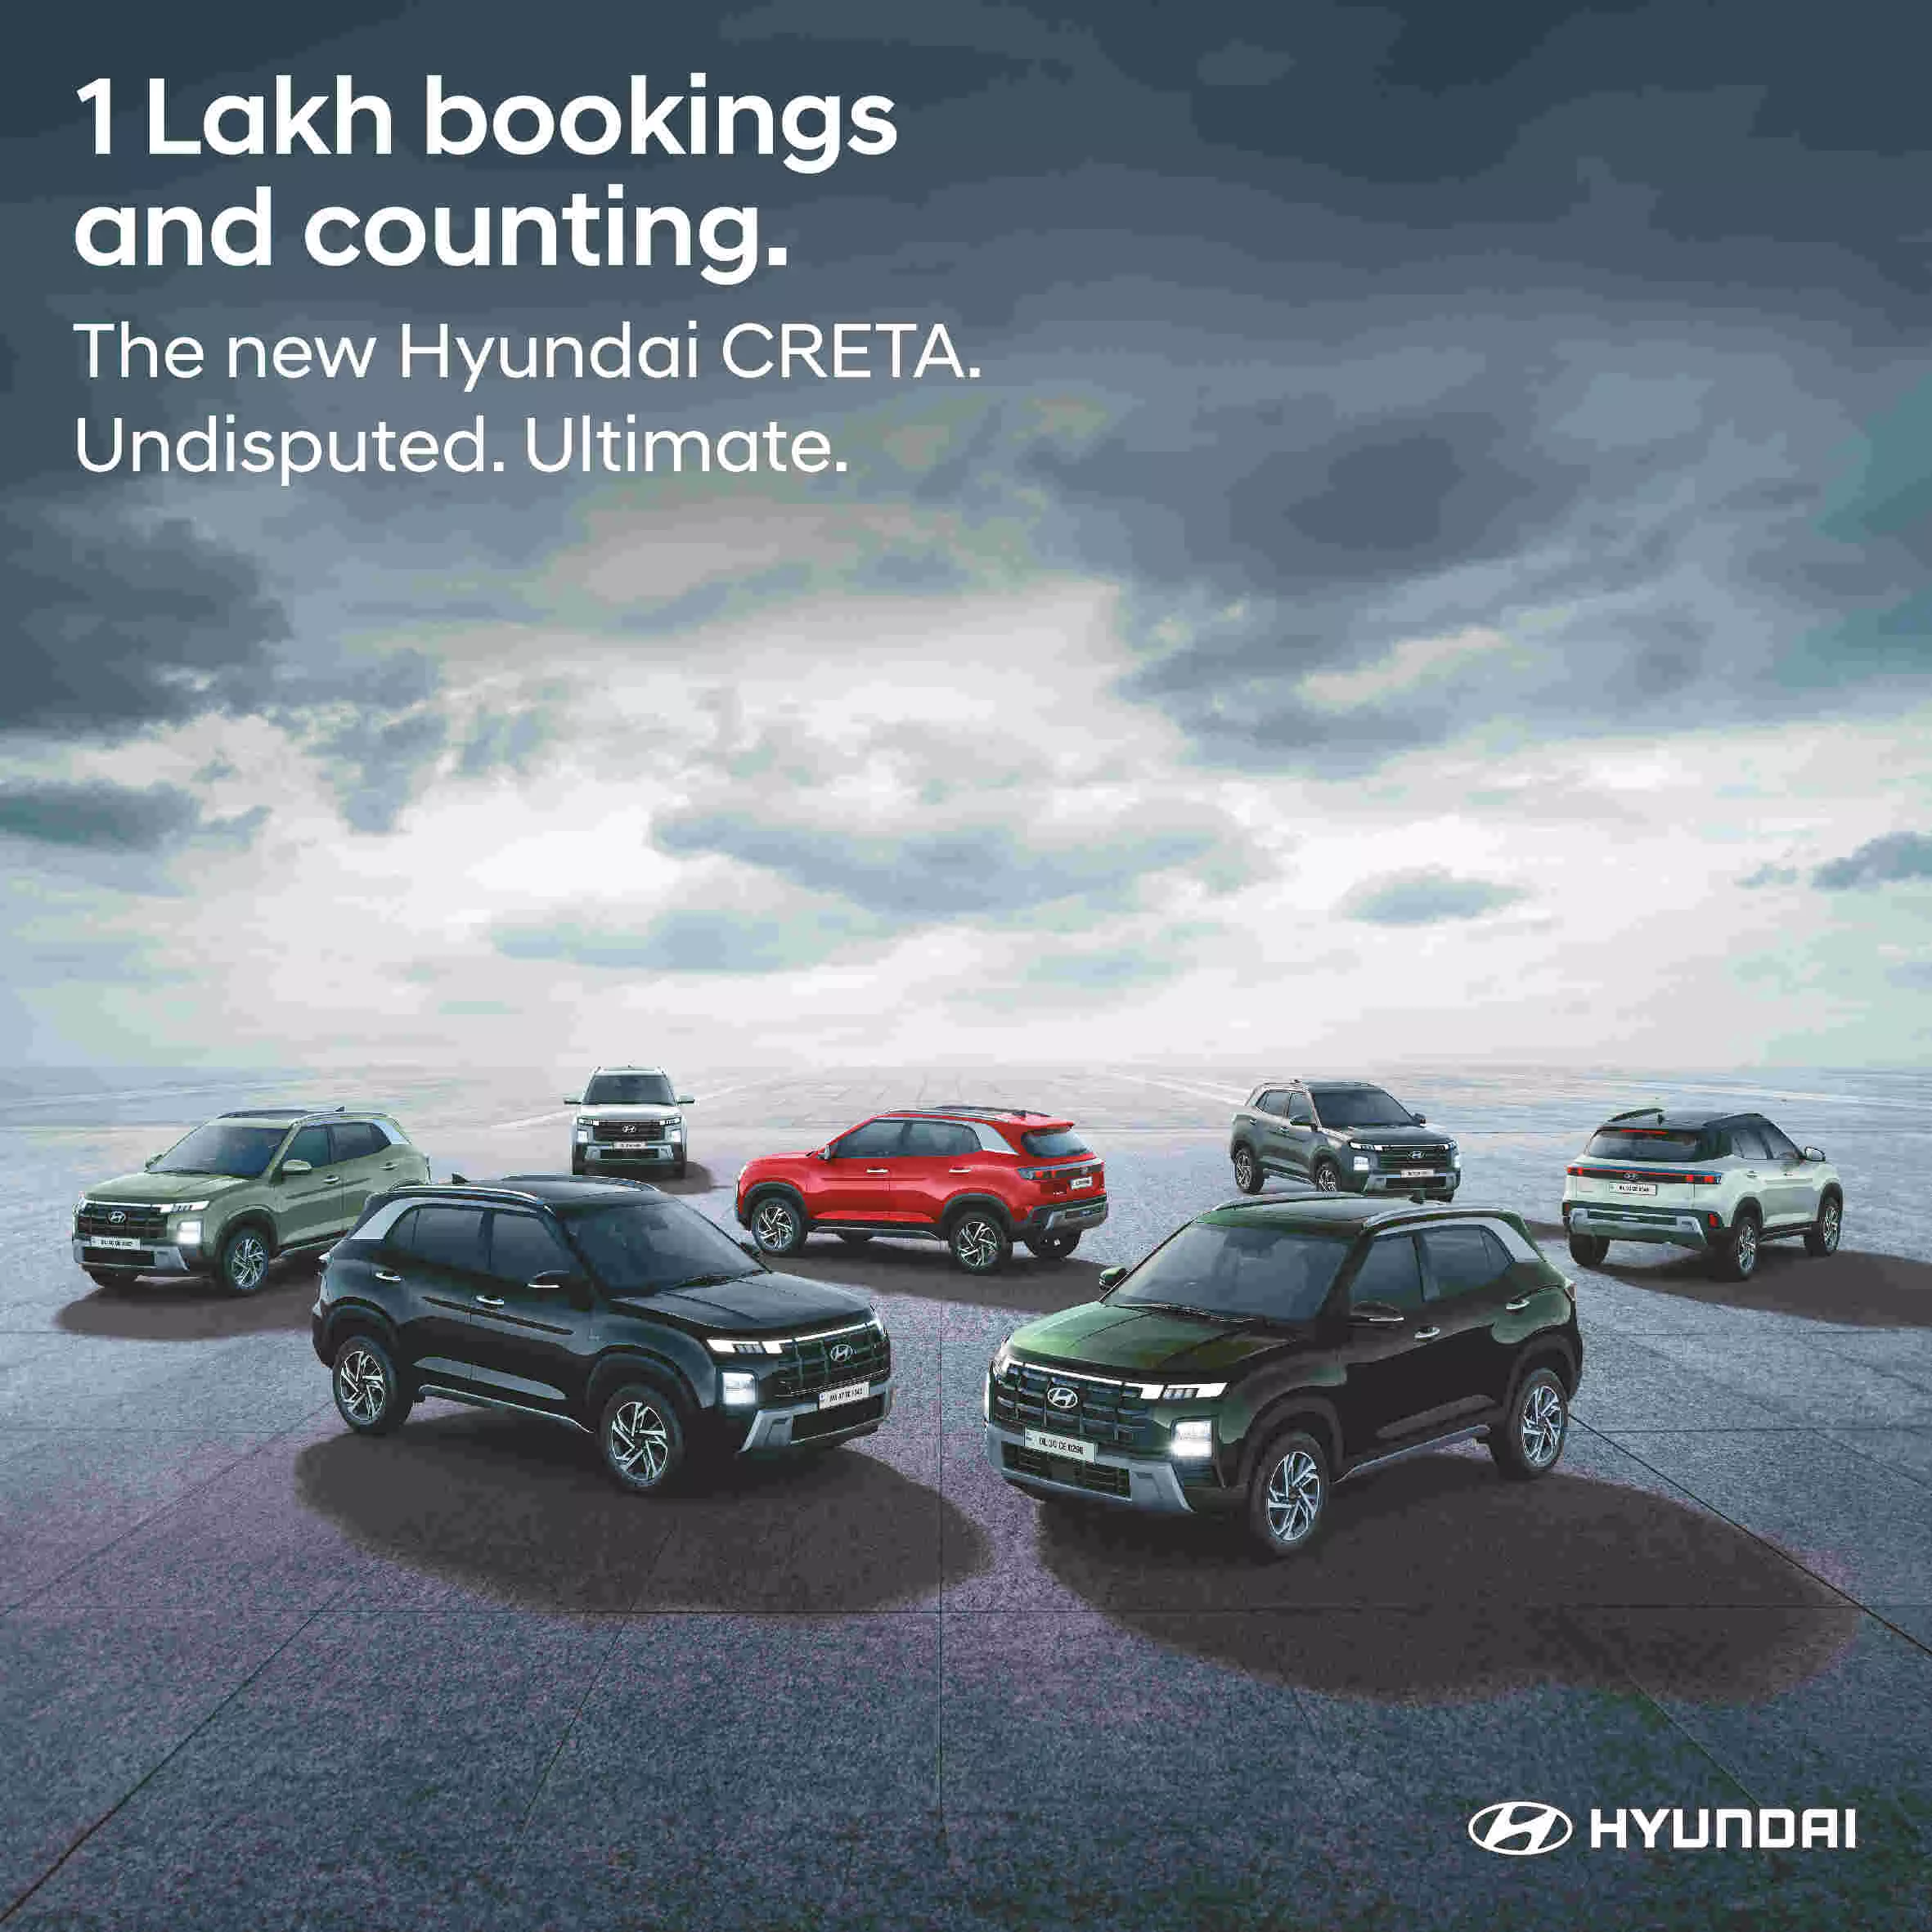 New Hyundai CRETA dominates SUV segment with 1 lakh bookings